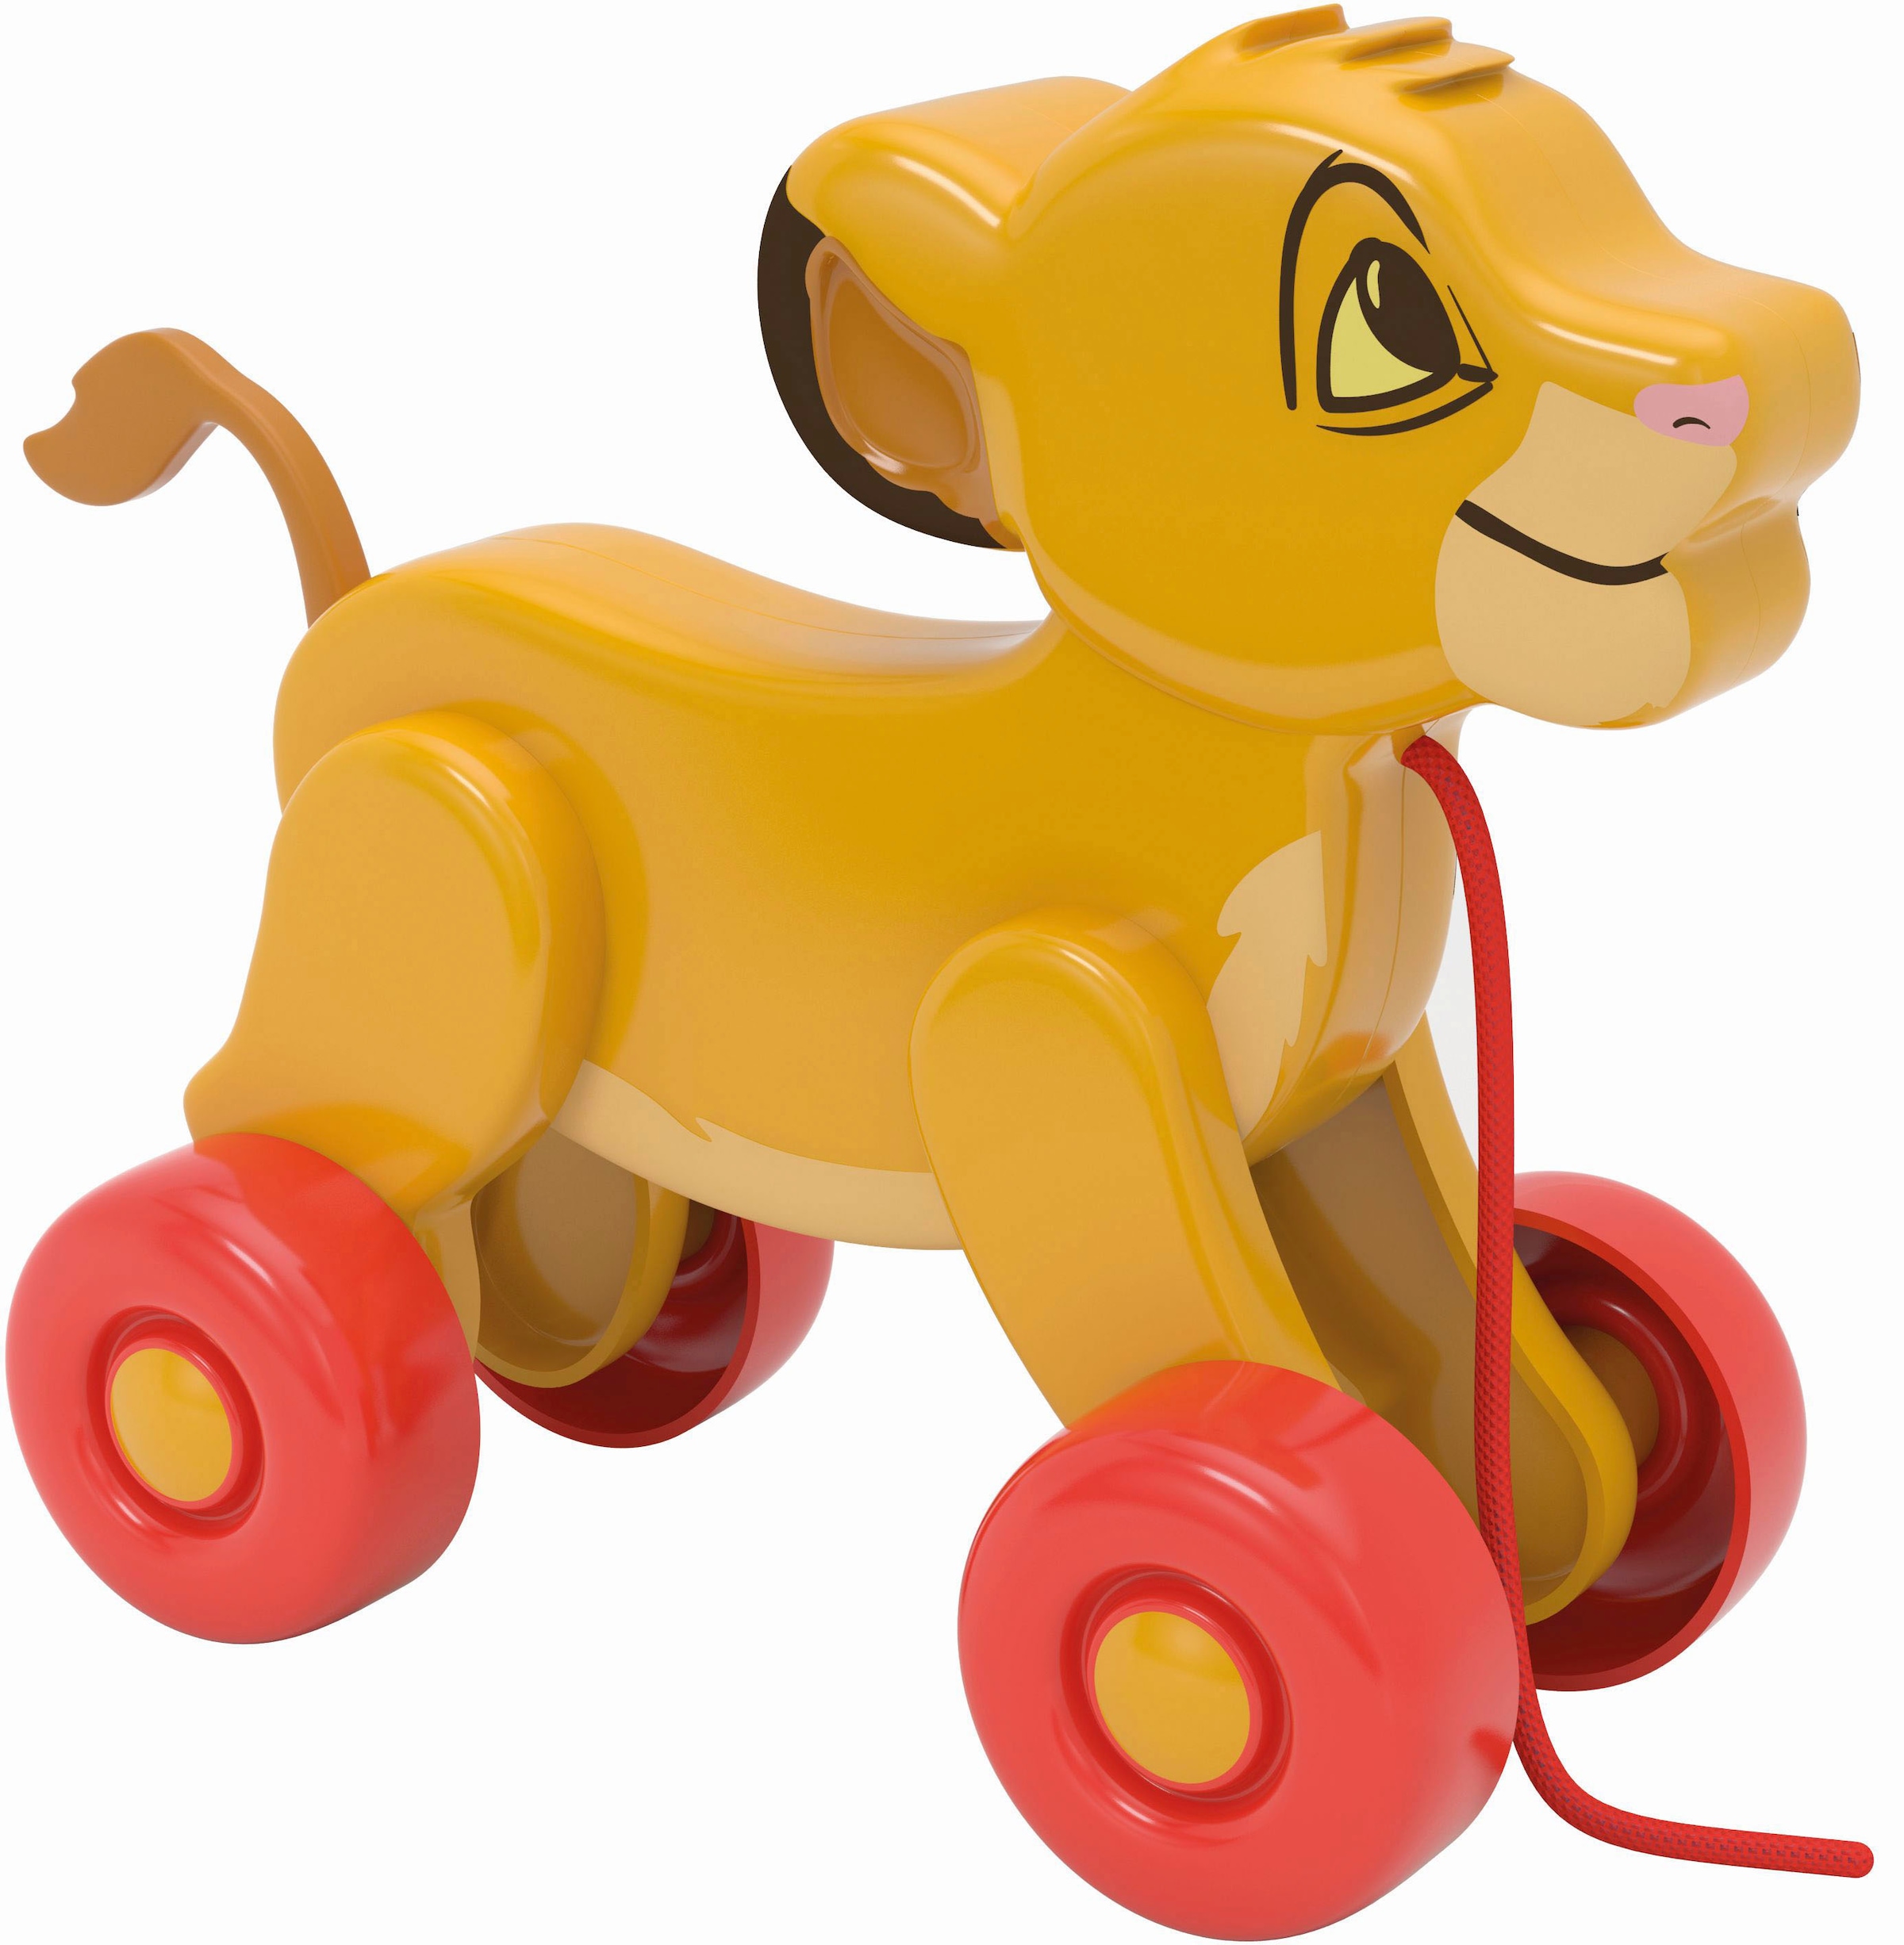 Nachziehspielzeug »Disney Baby, Nachzieh-Simba«, Made in Europe